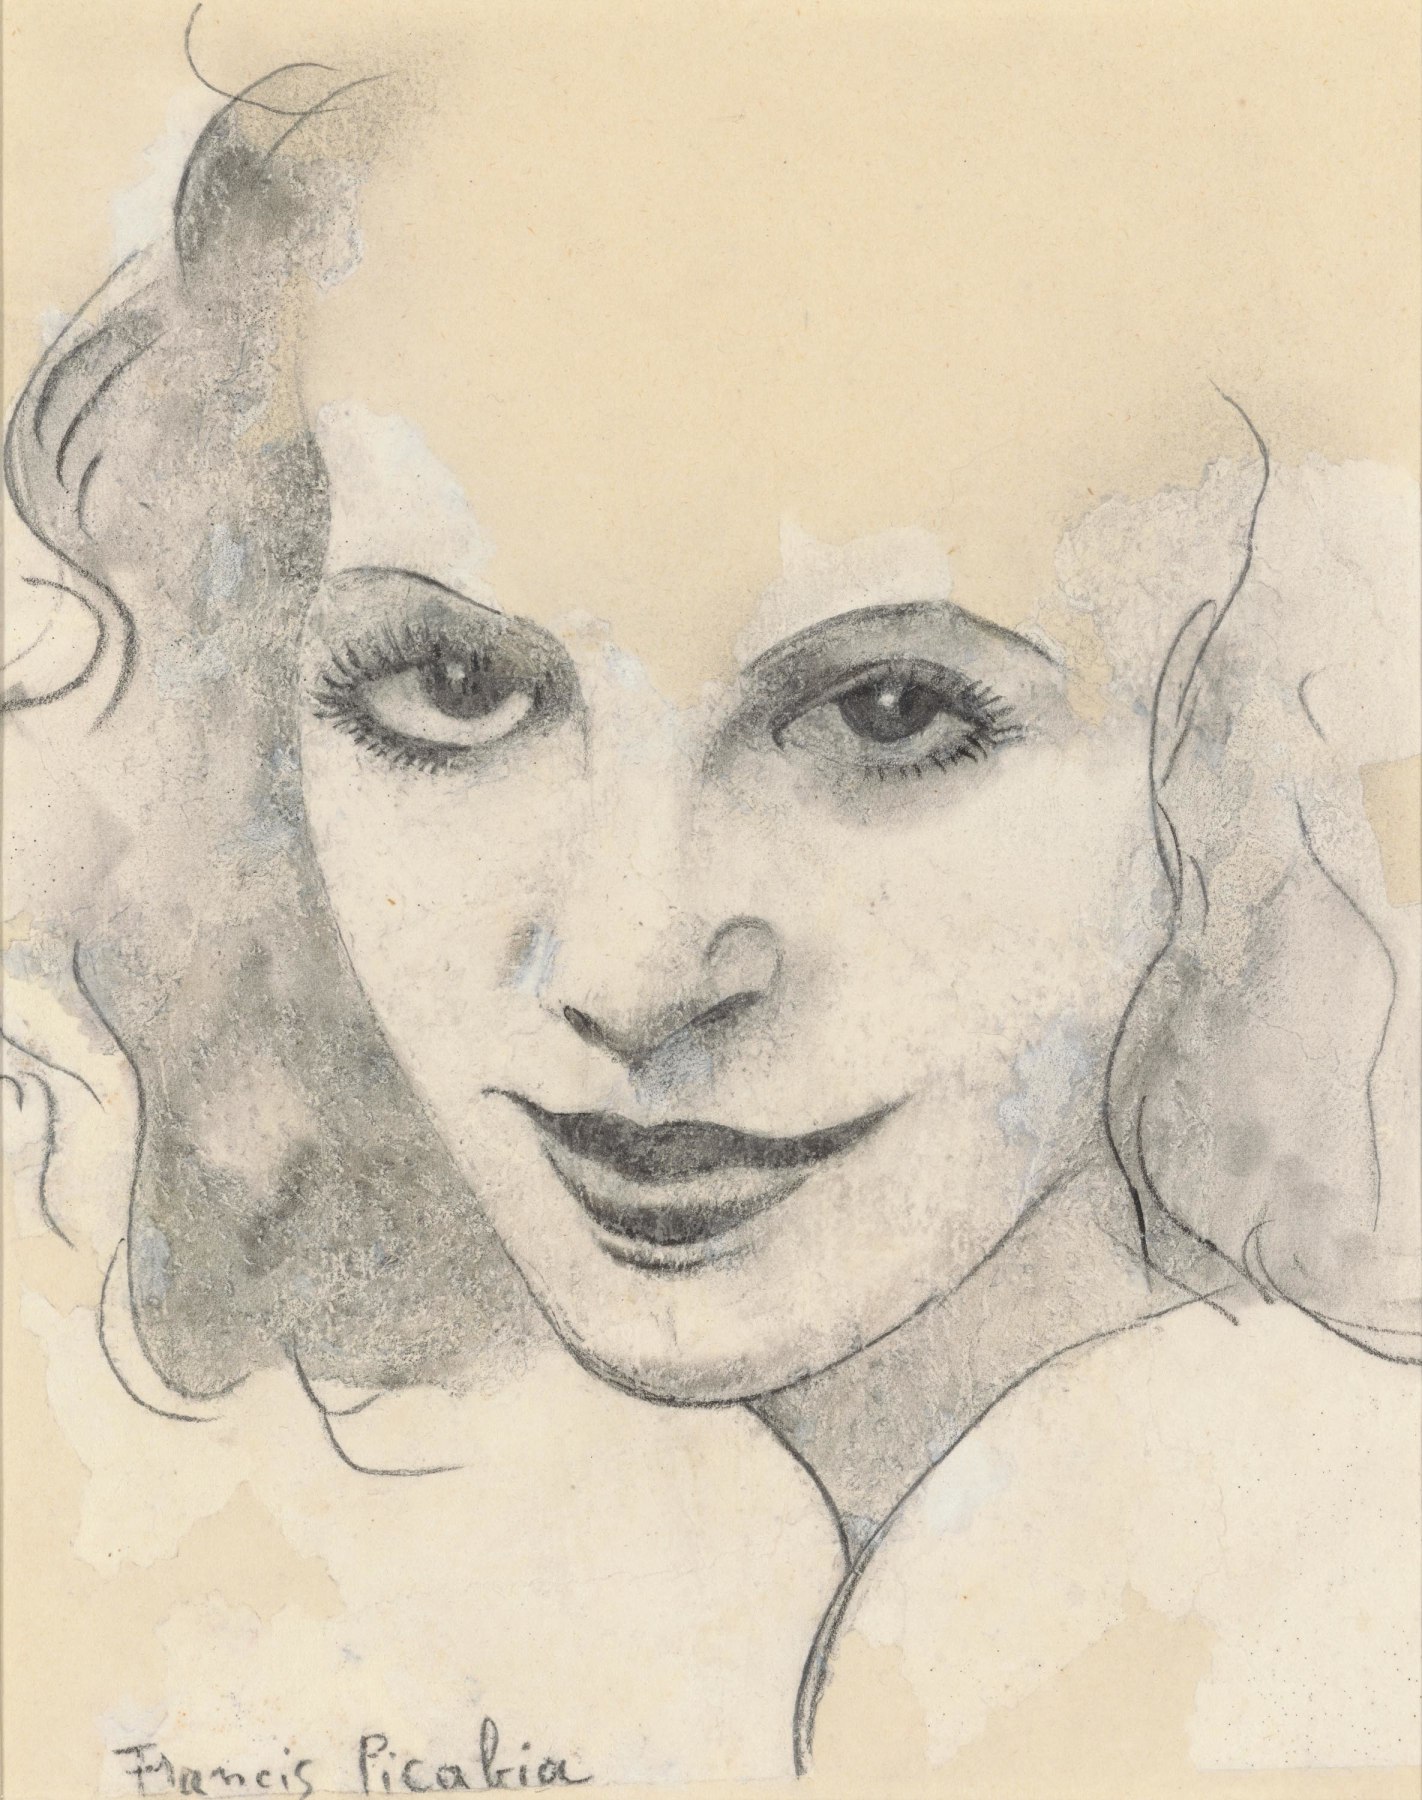 Francis Picabia

&amp;ldquo;T&amp;ecirc;te de femme&amp;rdquo;, ca. 1941&amp;ndash;1942

Pencil, gouache on paper

10 1/4 x 7 3/4 inches

26 x 20 cm

PIZ 159
$170,000